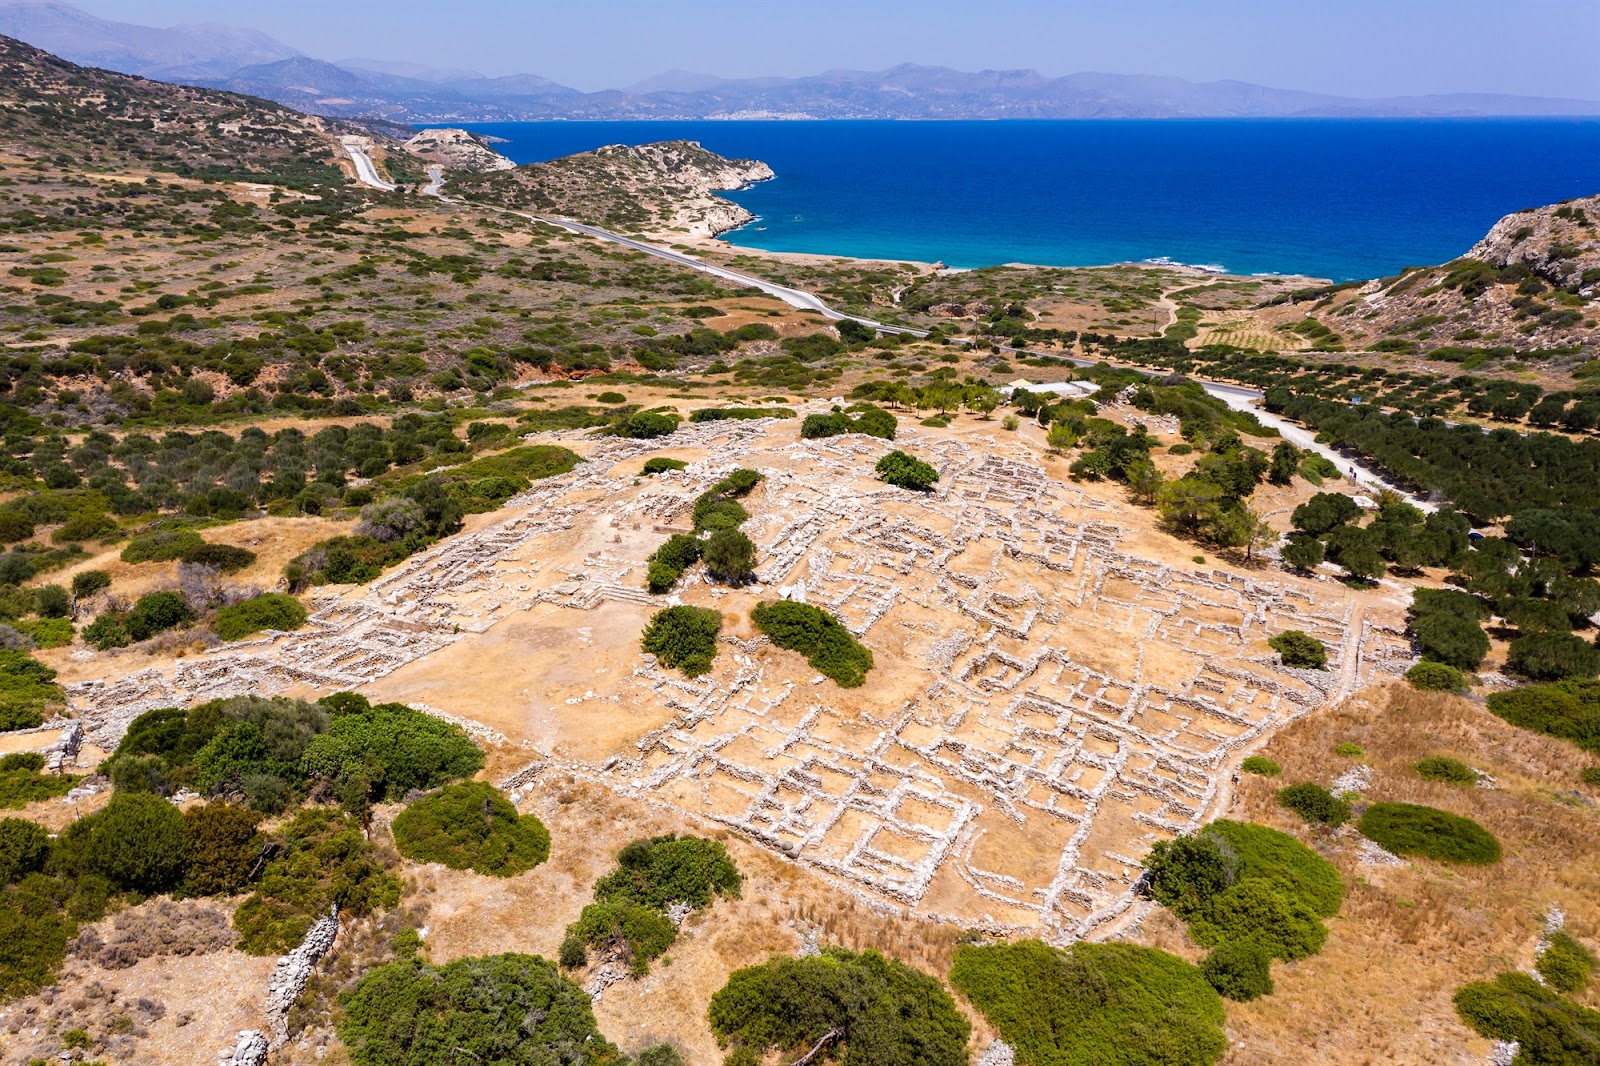 O οικισμός της υστερομινωικής περιόδου (1550-1450 π.Χ.) στον αρχαιολογικό χώρο των Γουρνιών Κρήτης, όπου θα παρουσιαστεί το «Ζωολόγιο».